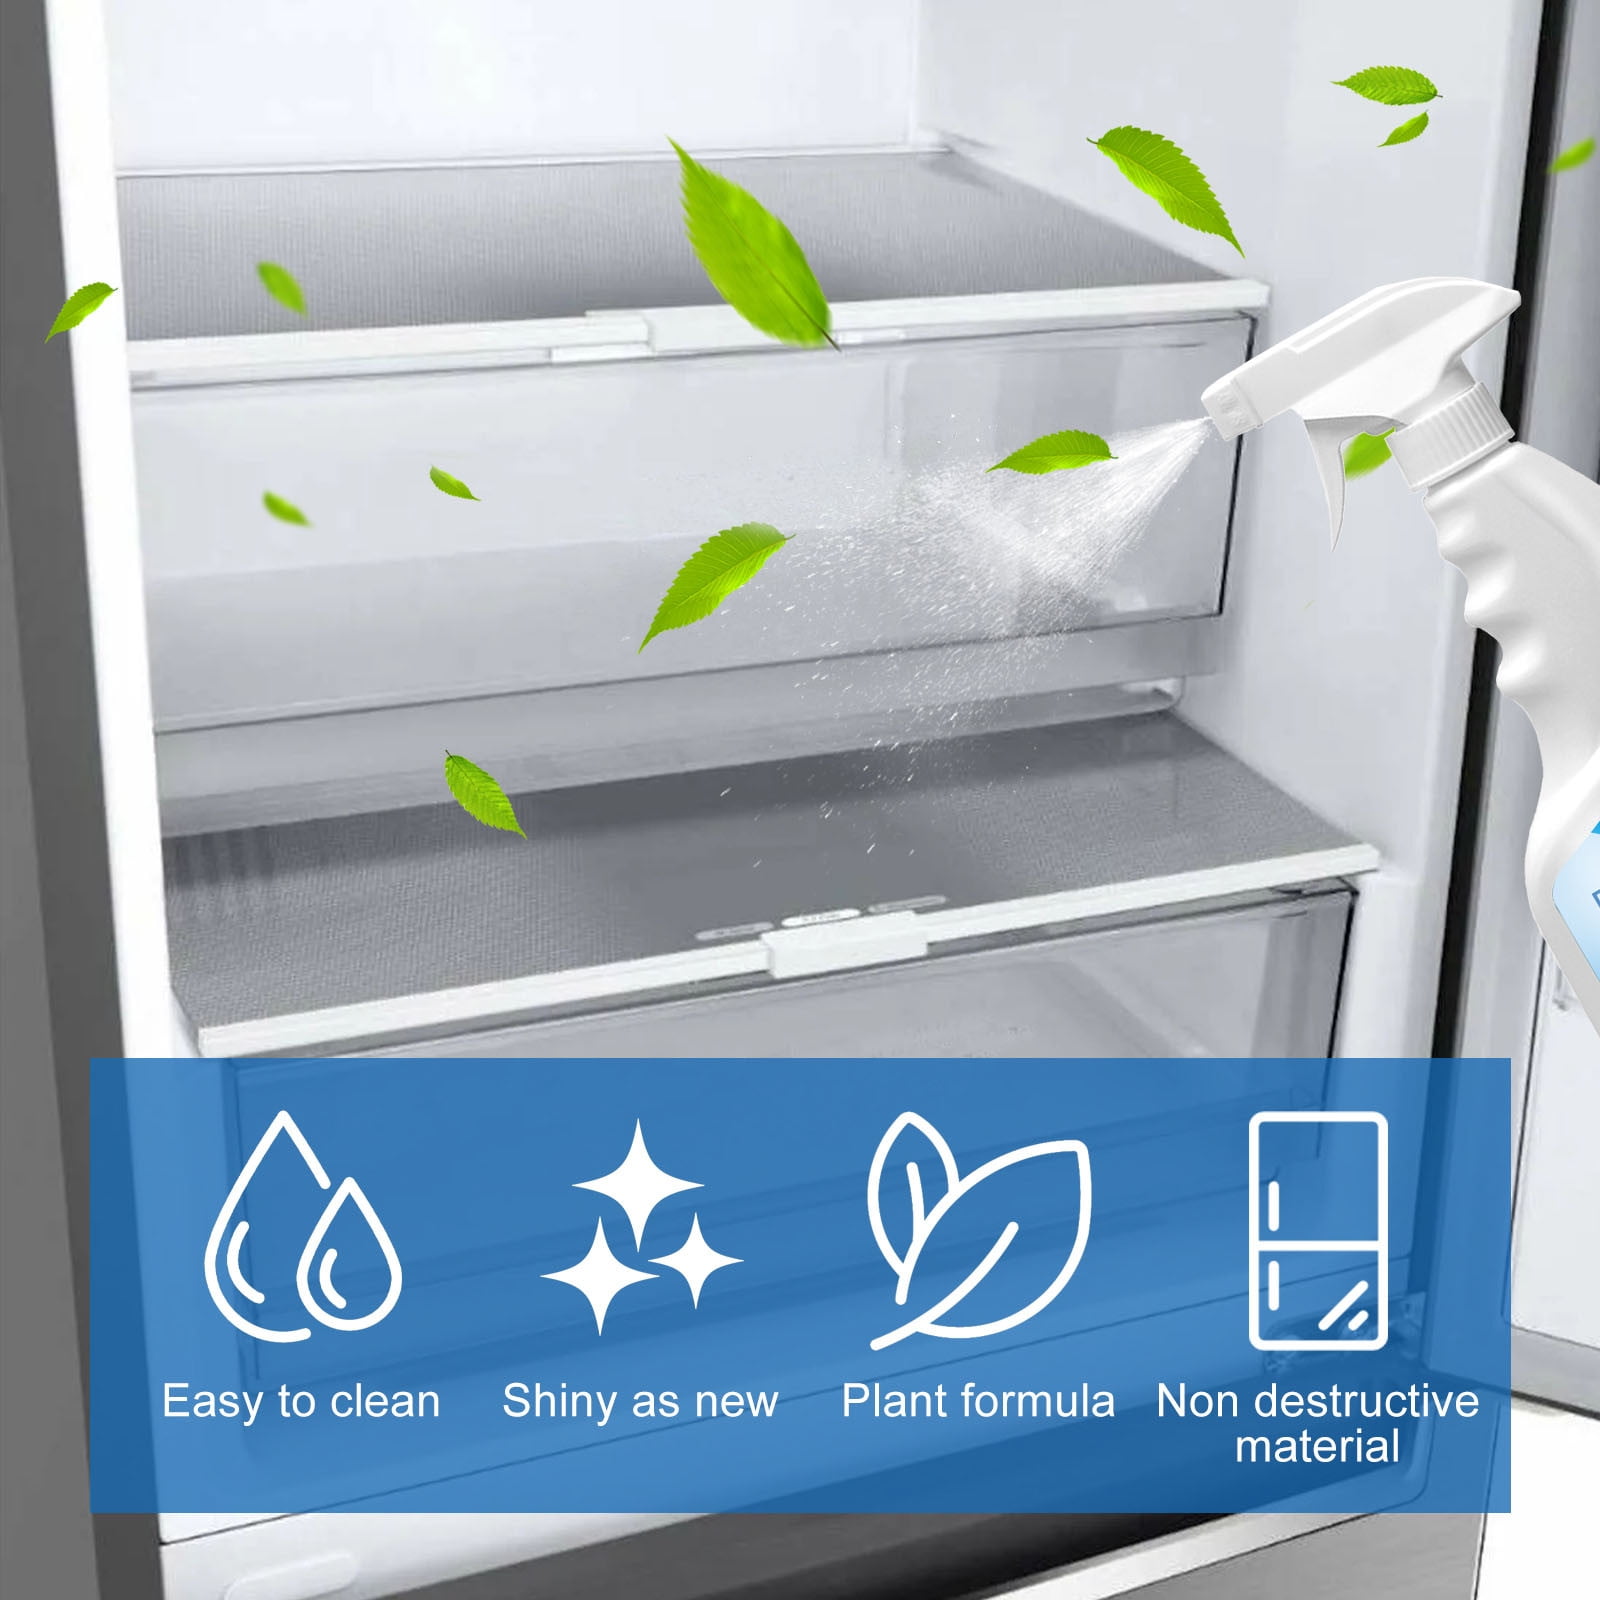 Refrigerator Deodorant Cleaner, Freezer Fridge Odor Eliminato, 120Ml  Cleaning Spray for Inside Refrigerator